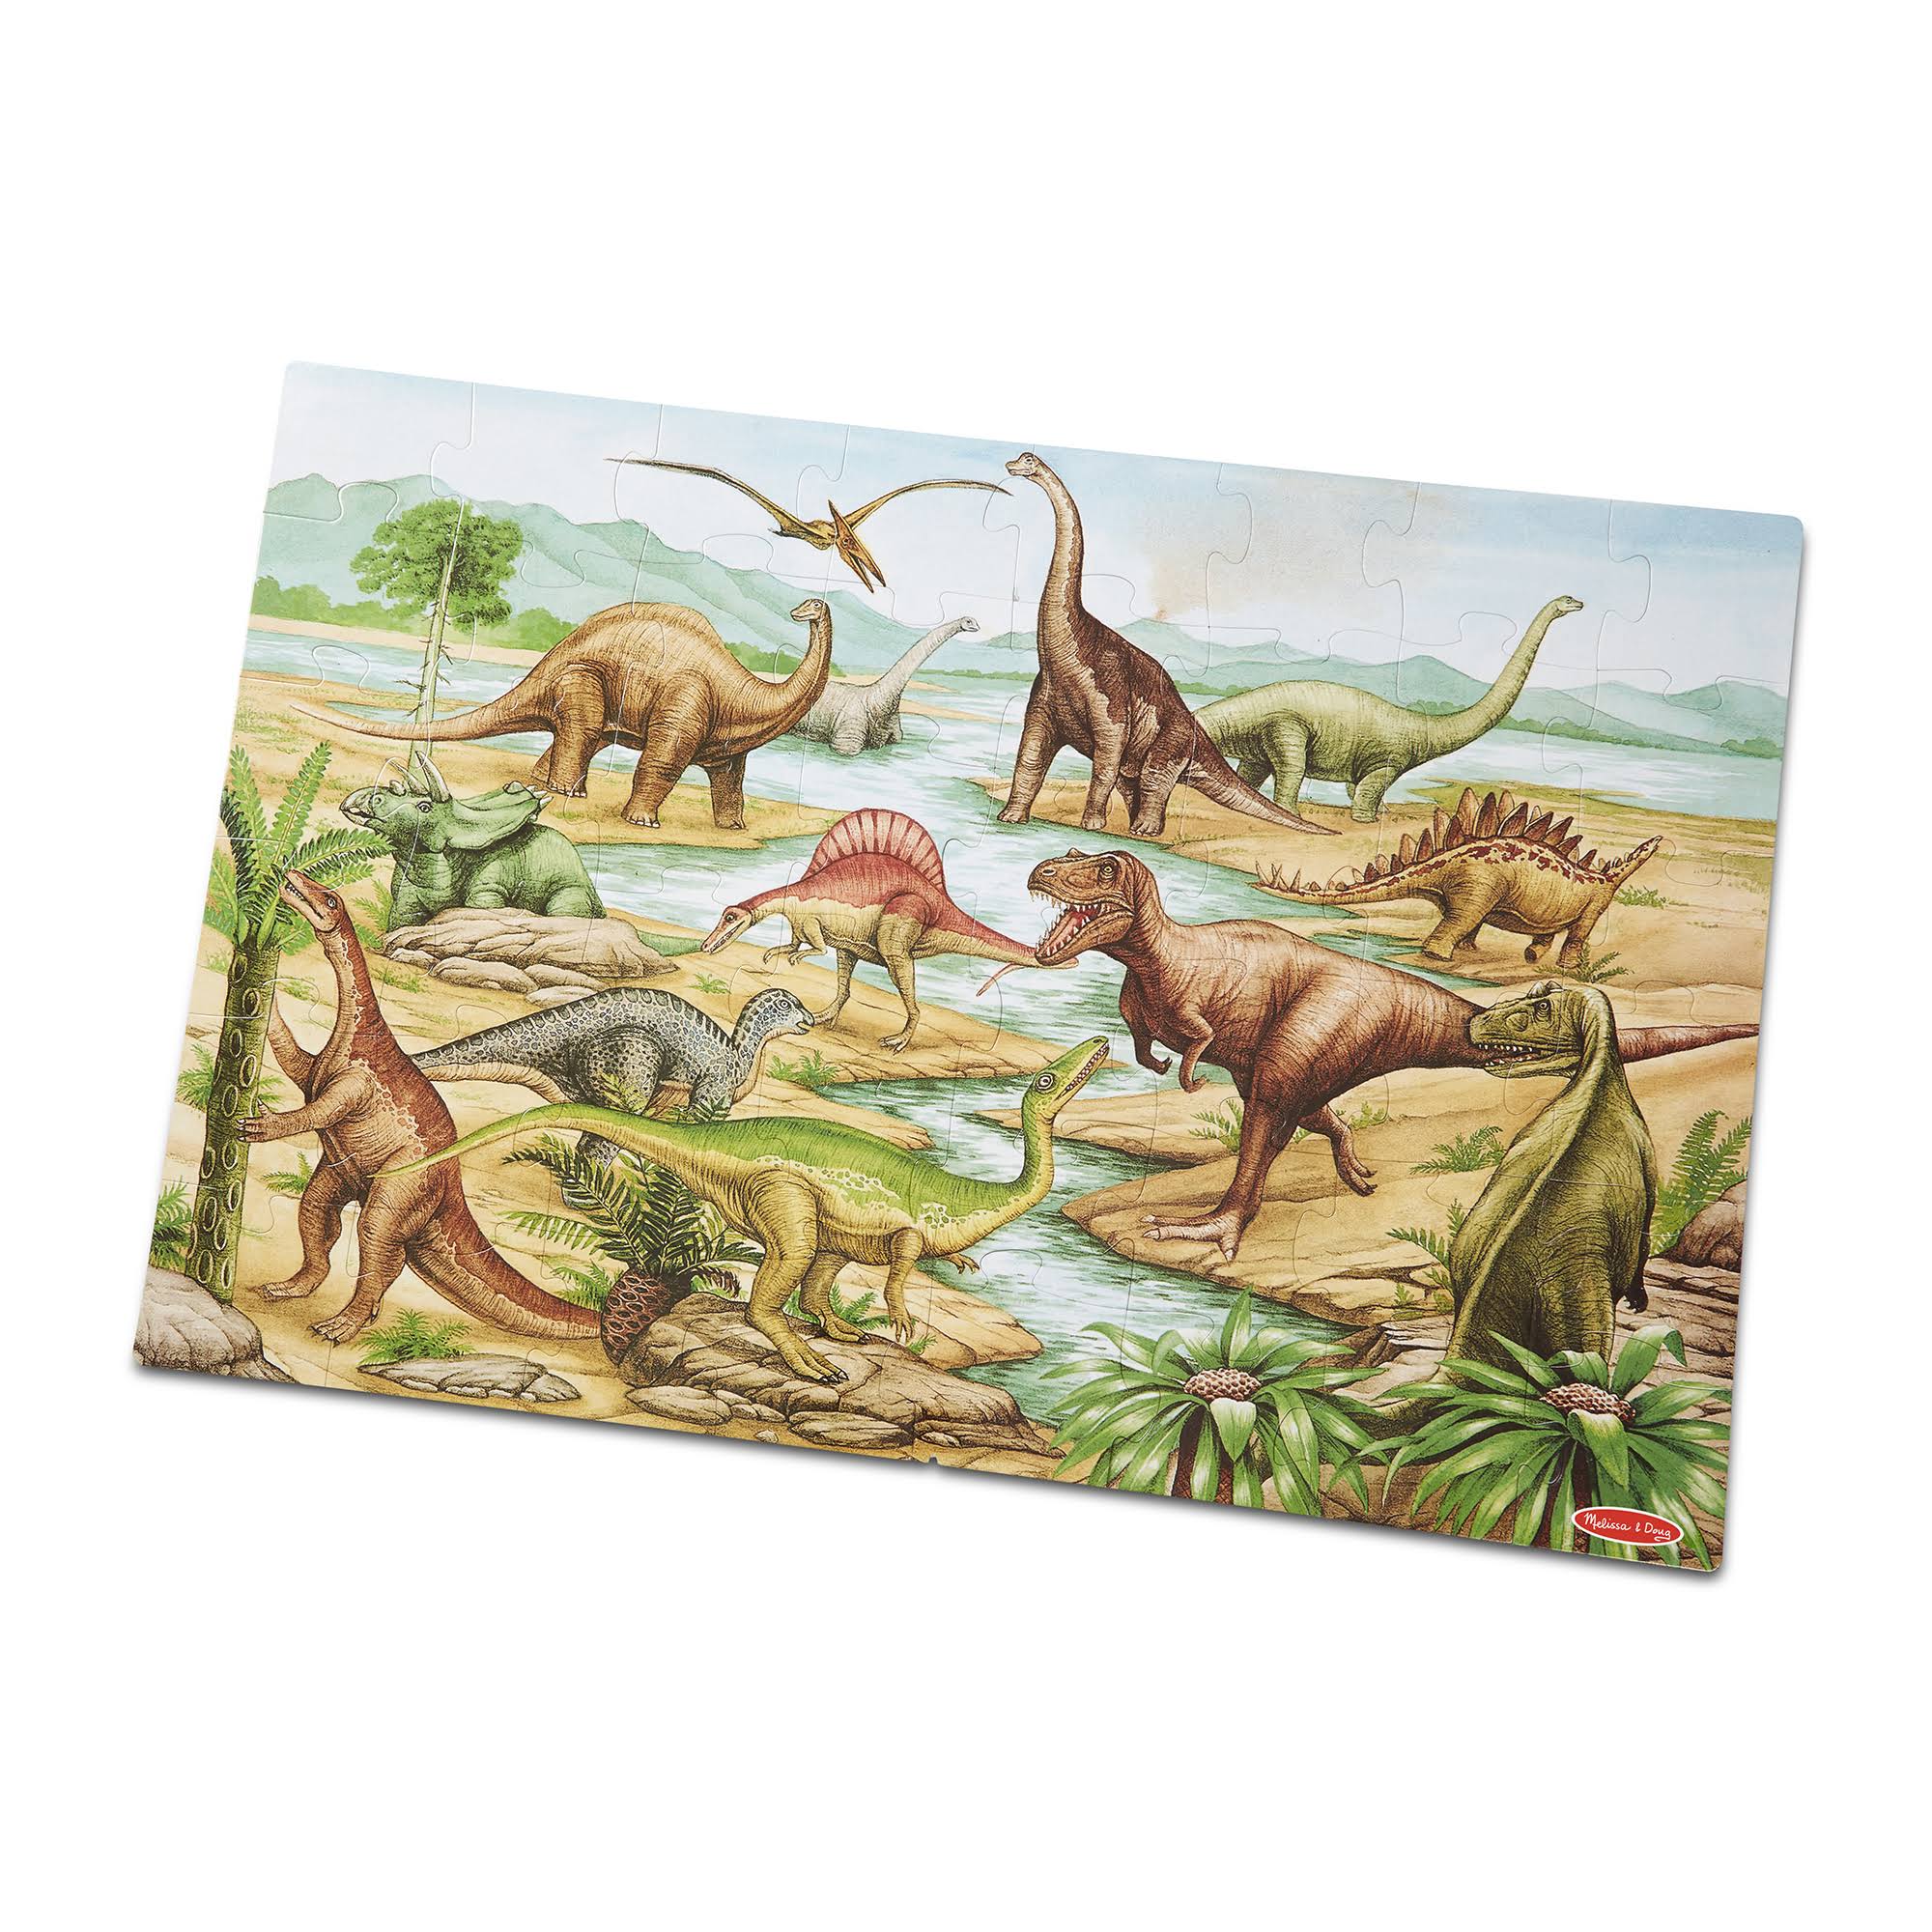 Melissa & Doug Dinosaurs Floor Puzzle - 48 Pieces